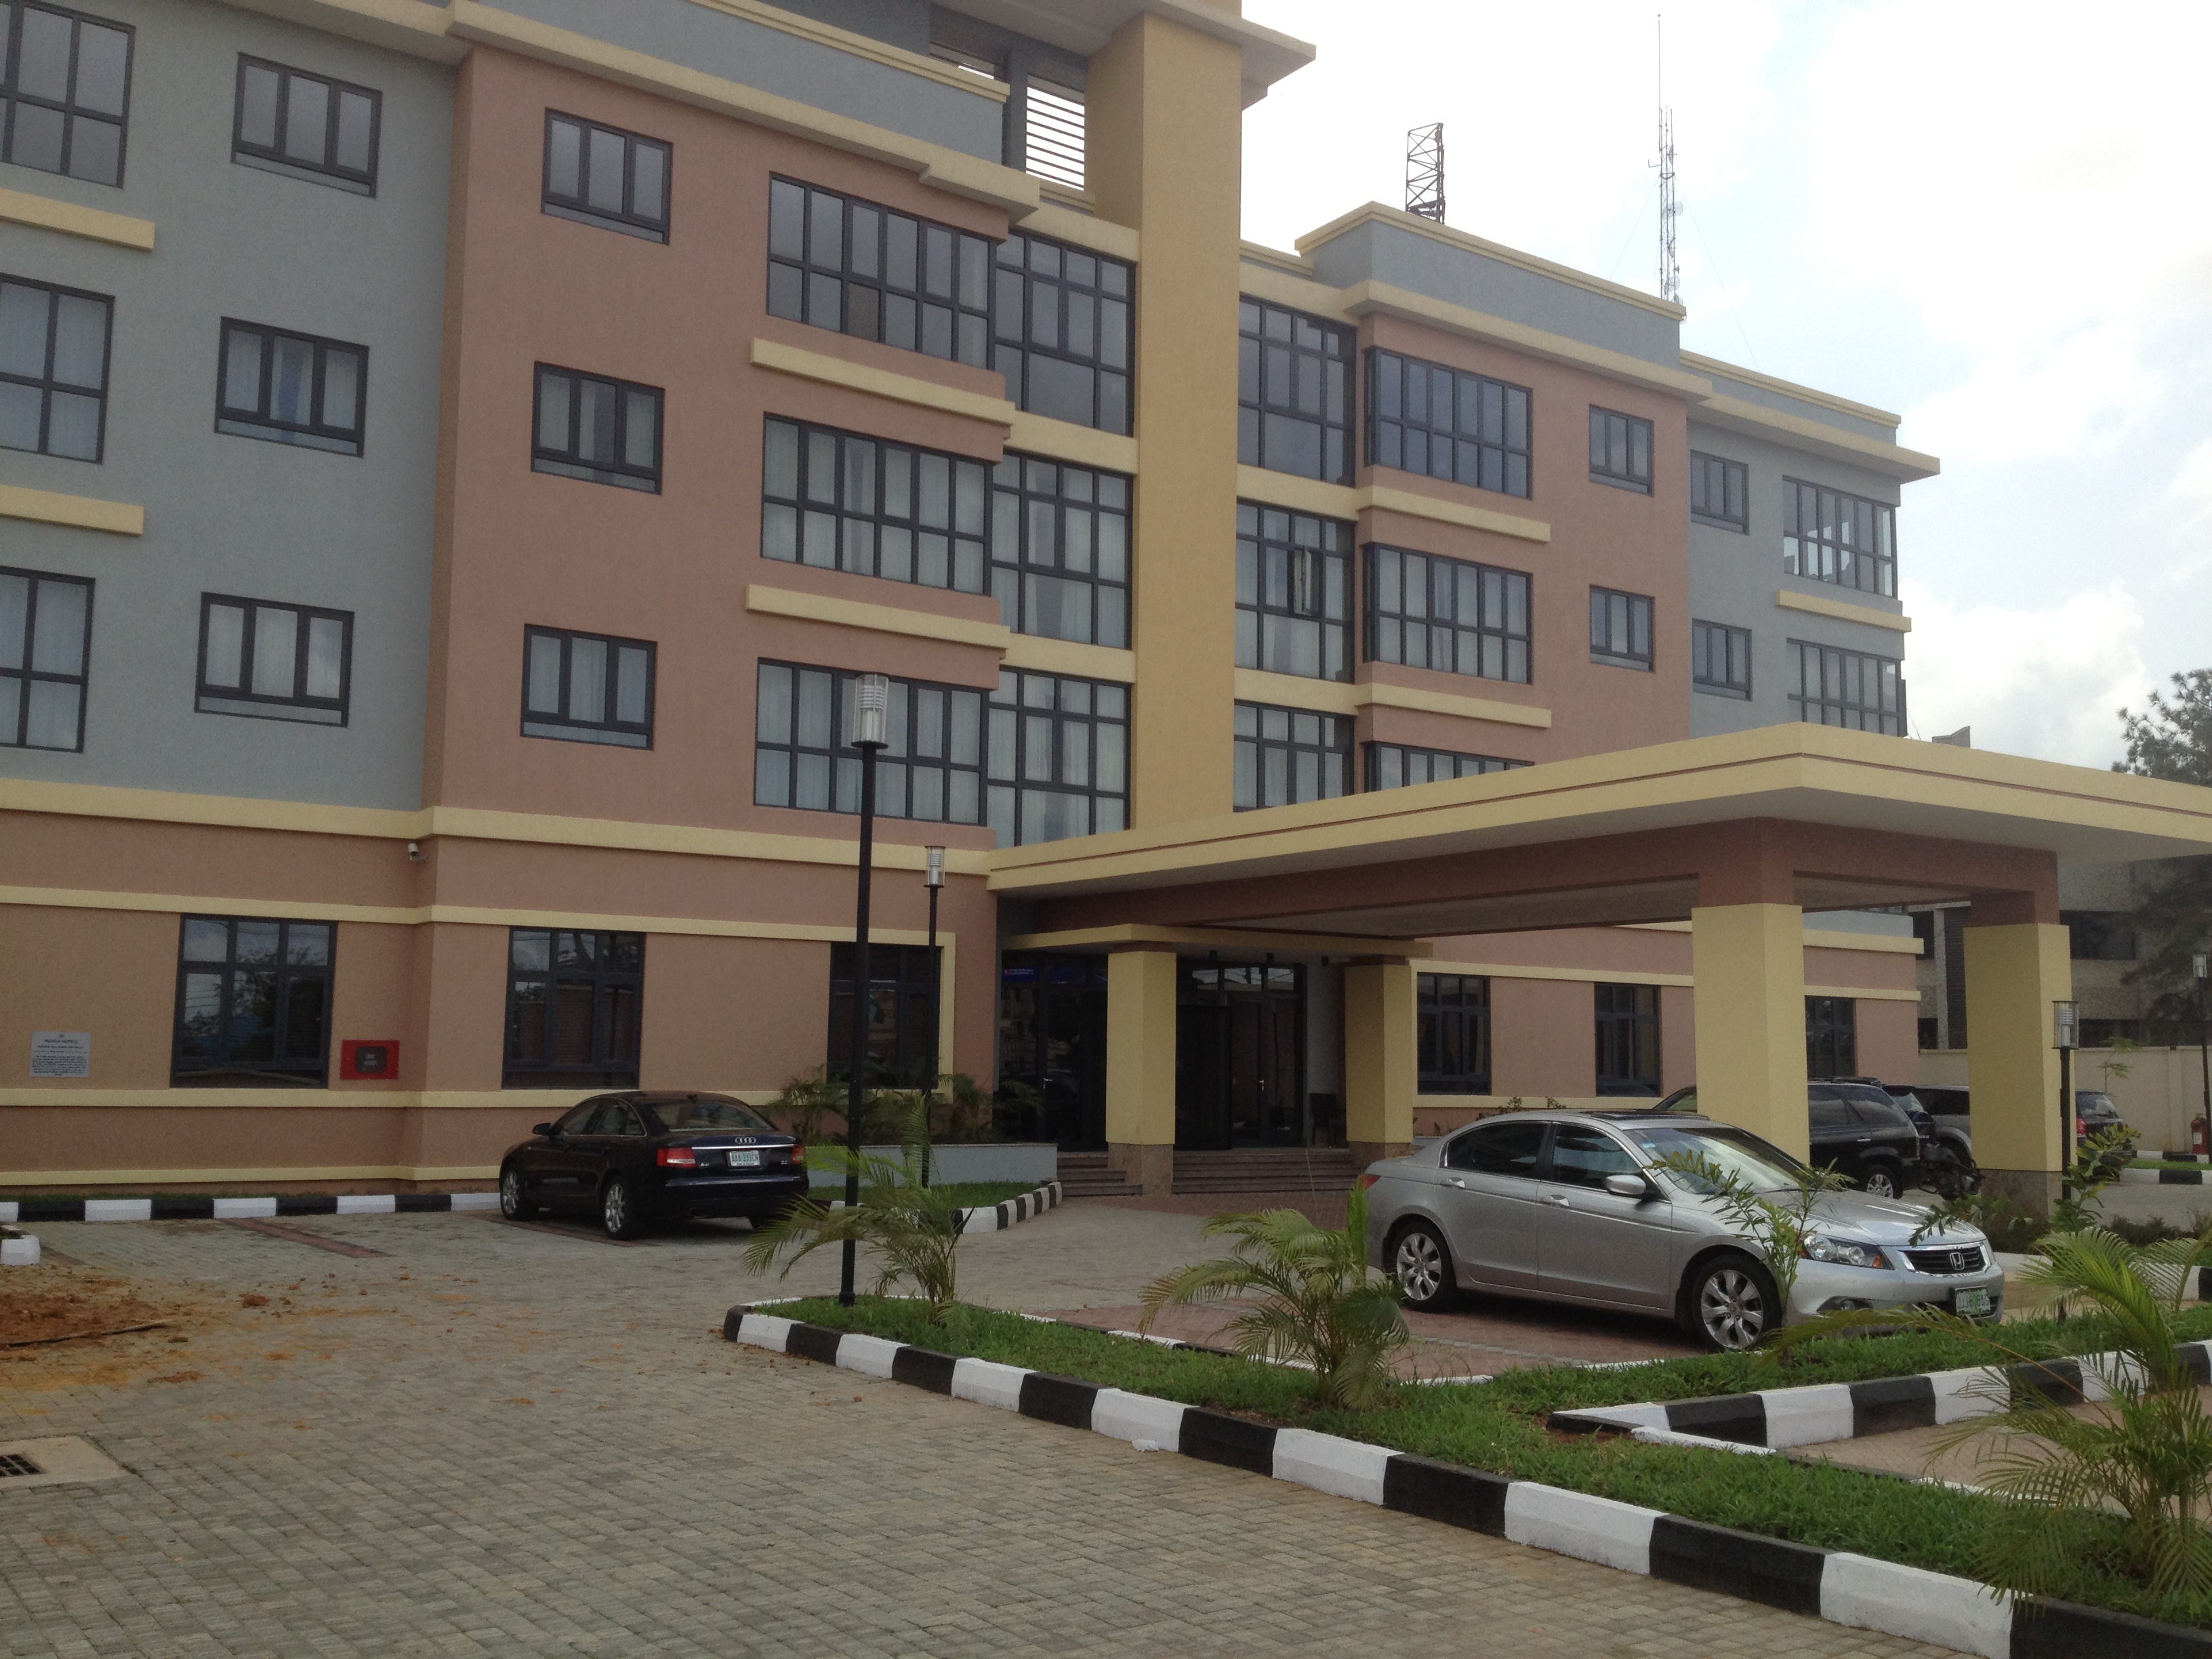 Protea Hotel Select, Alausa-
Ikeja, Lagos